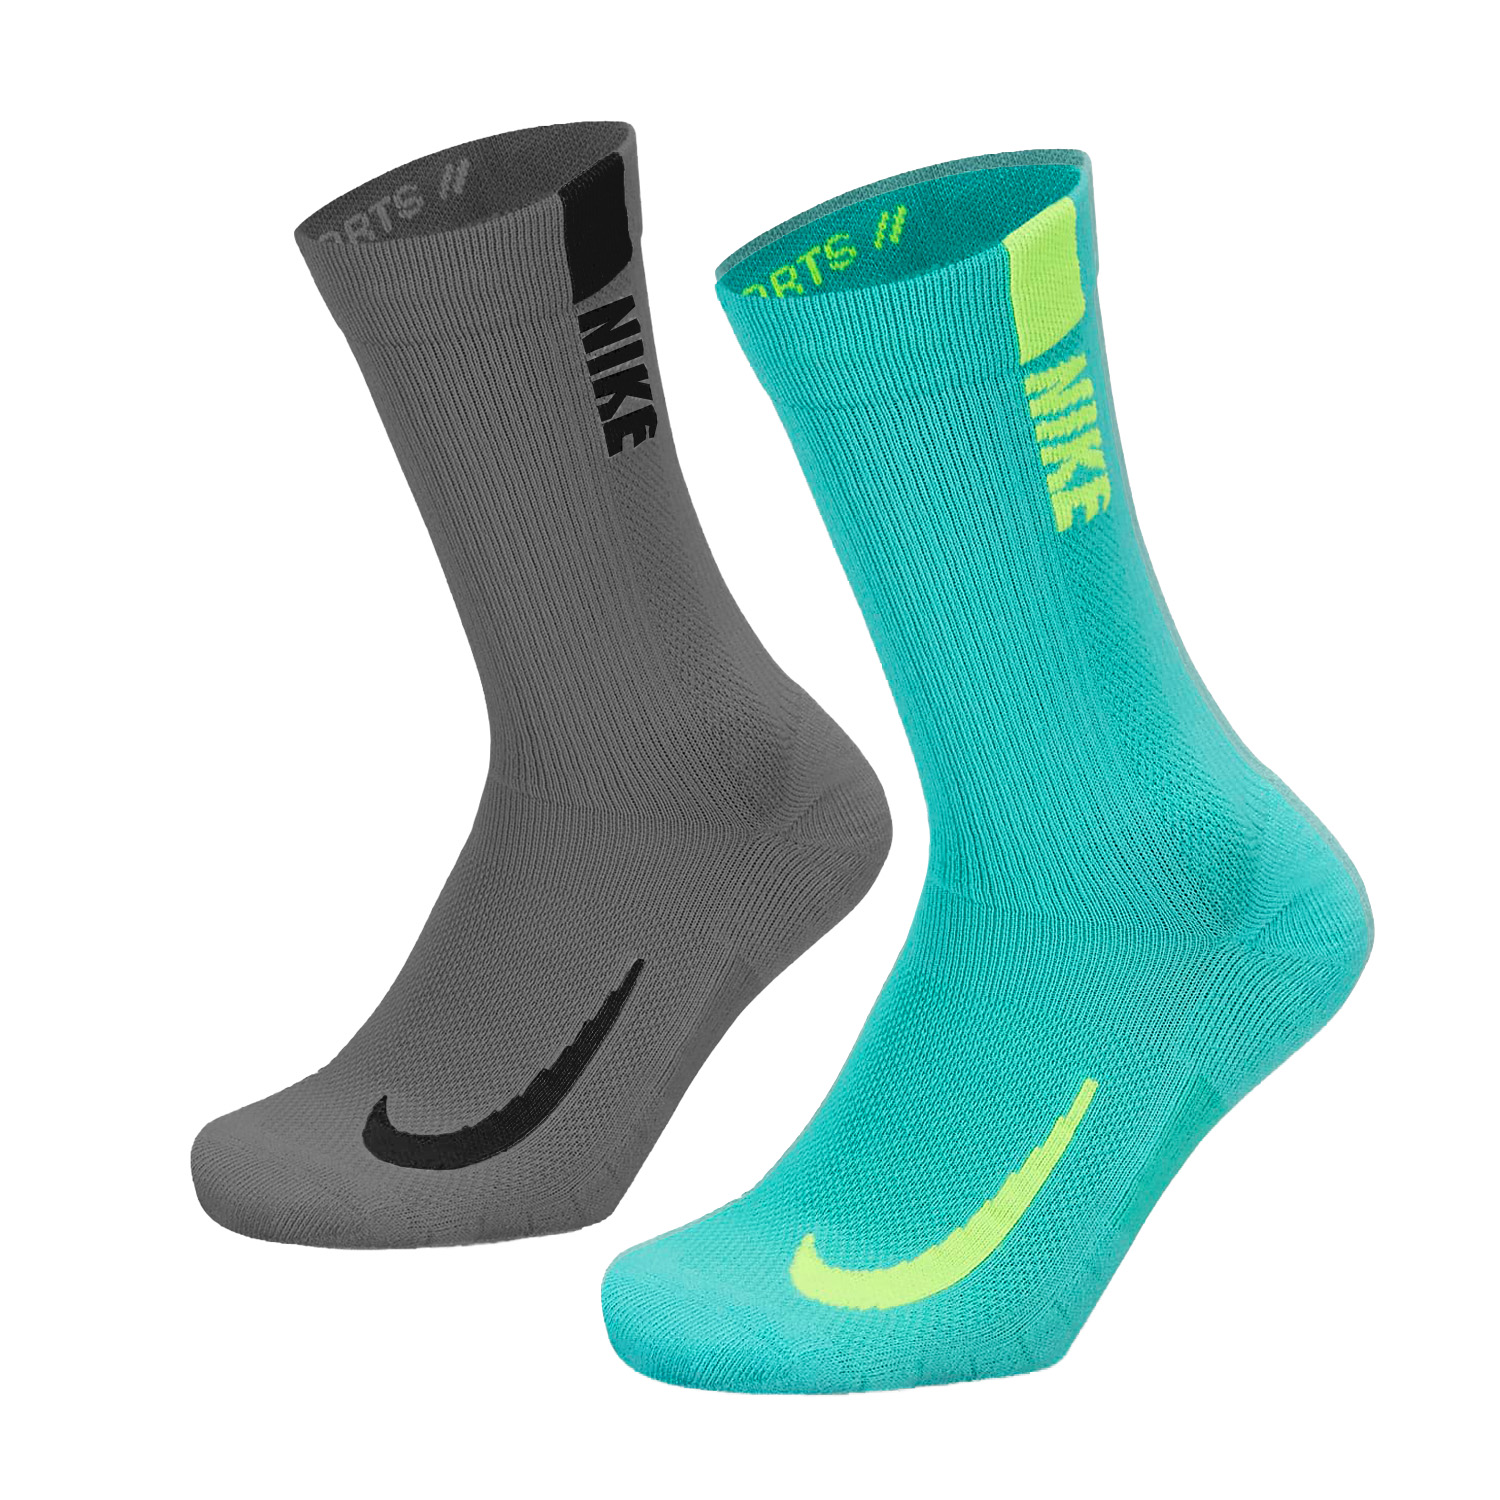 Nike Dri-FIT Multiplier Crew x 2 Running Socks - Multi Color